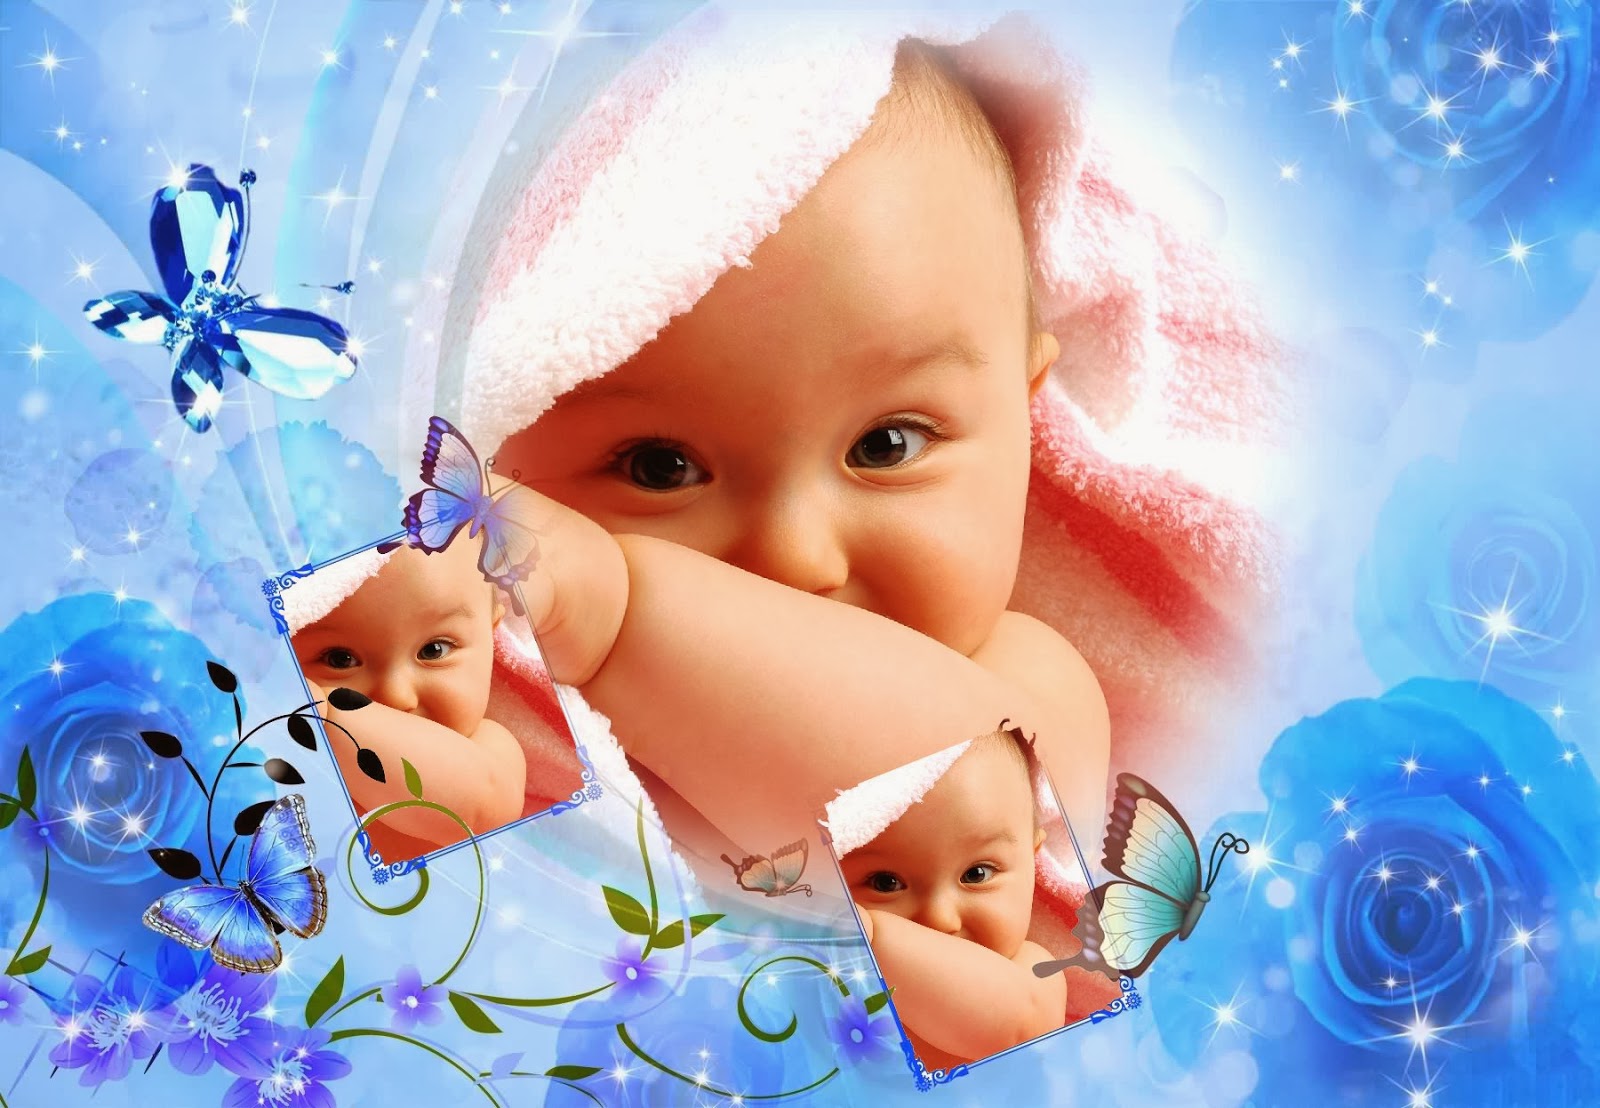 Baby Cute Wallpaper for Desktop Download